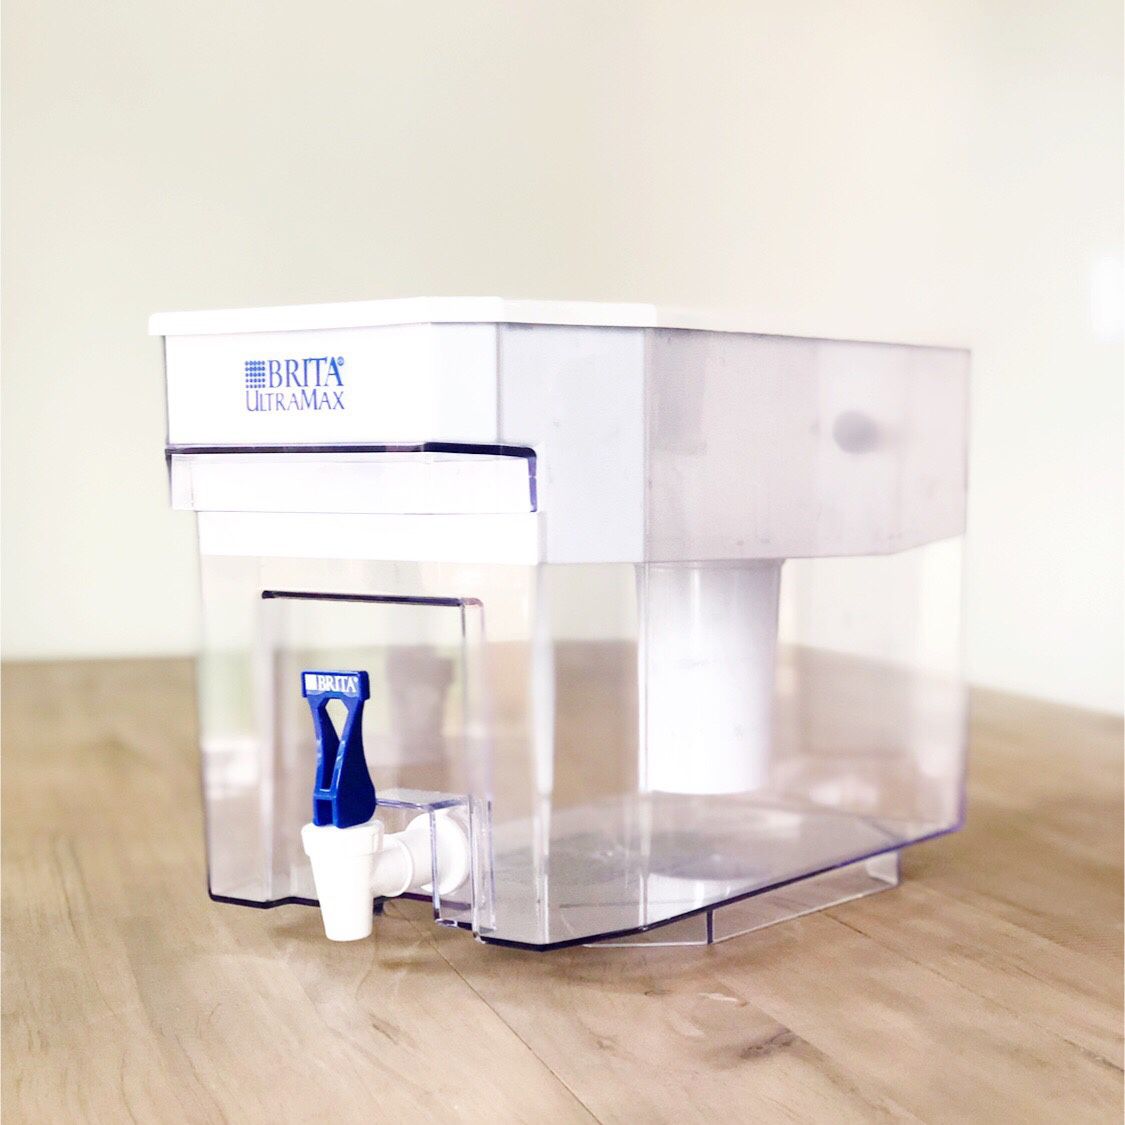 Brita Ultramax Water Filter Dispenser